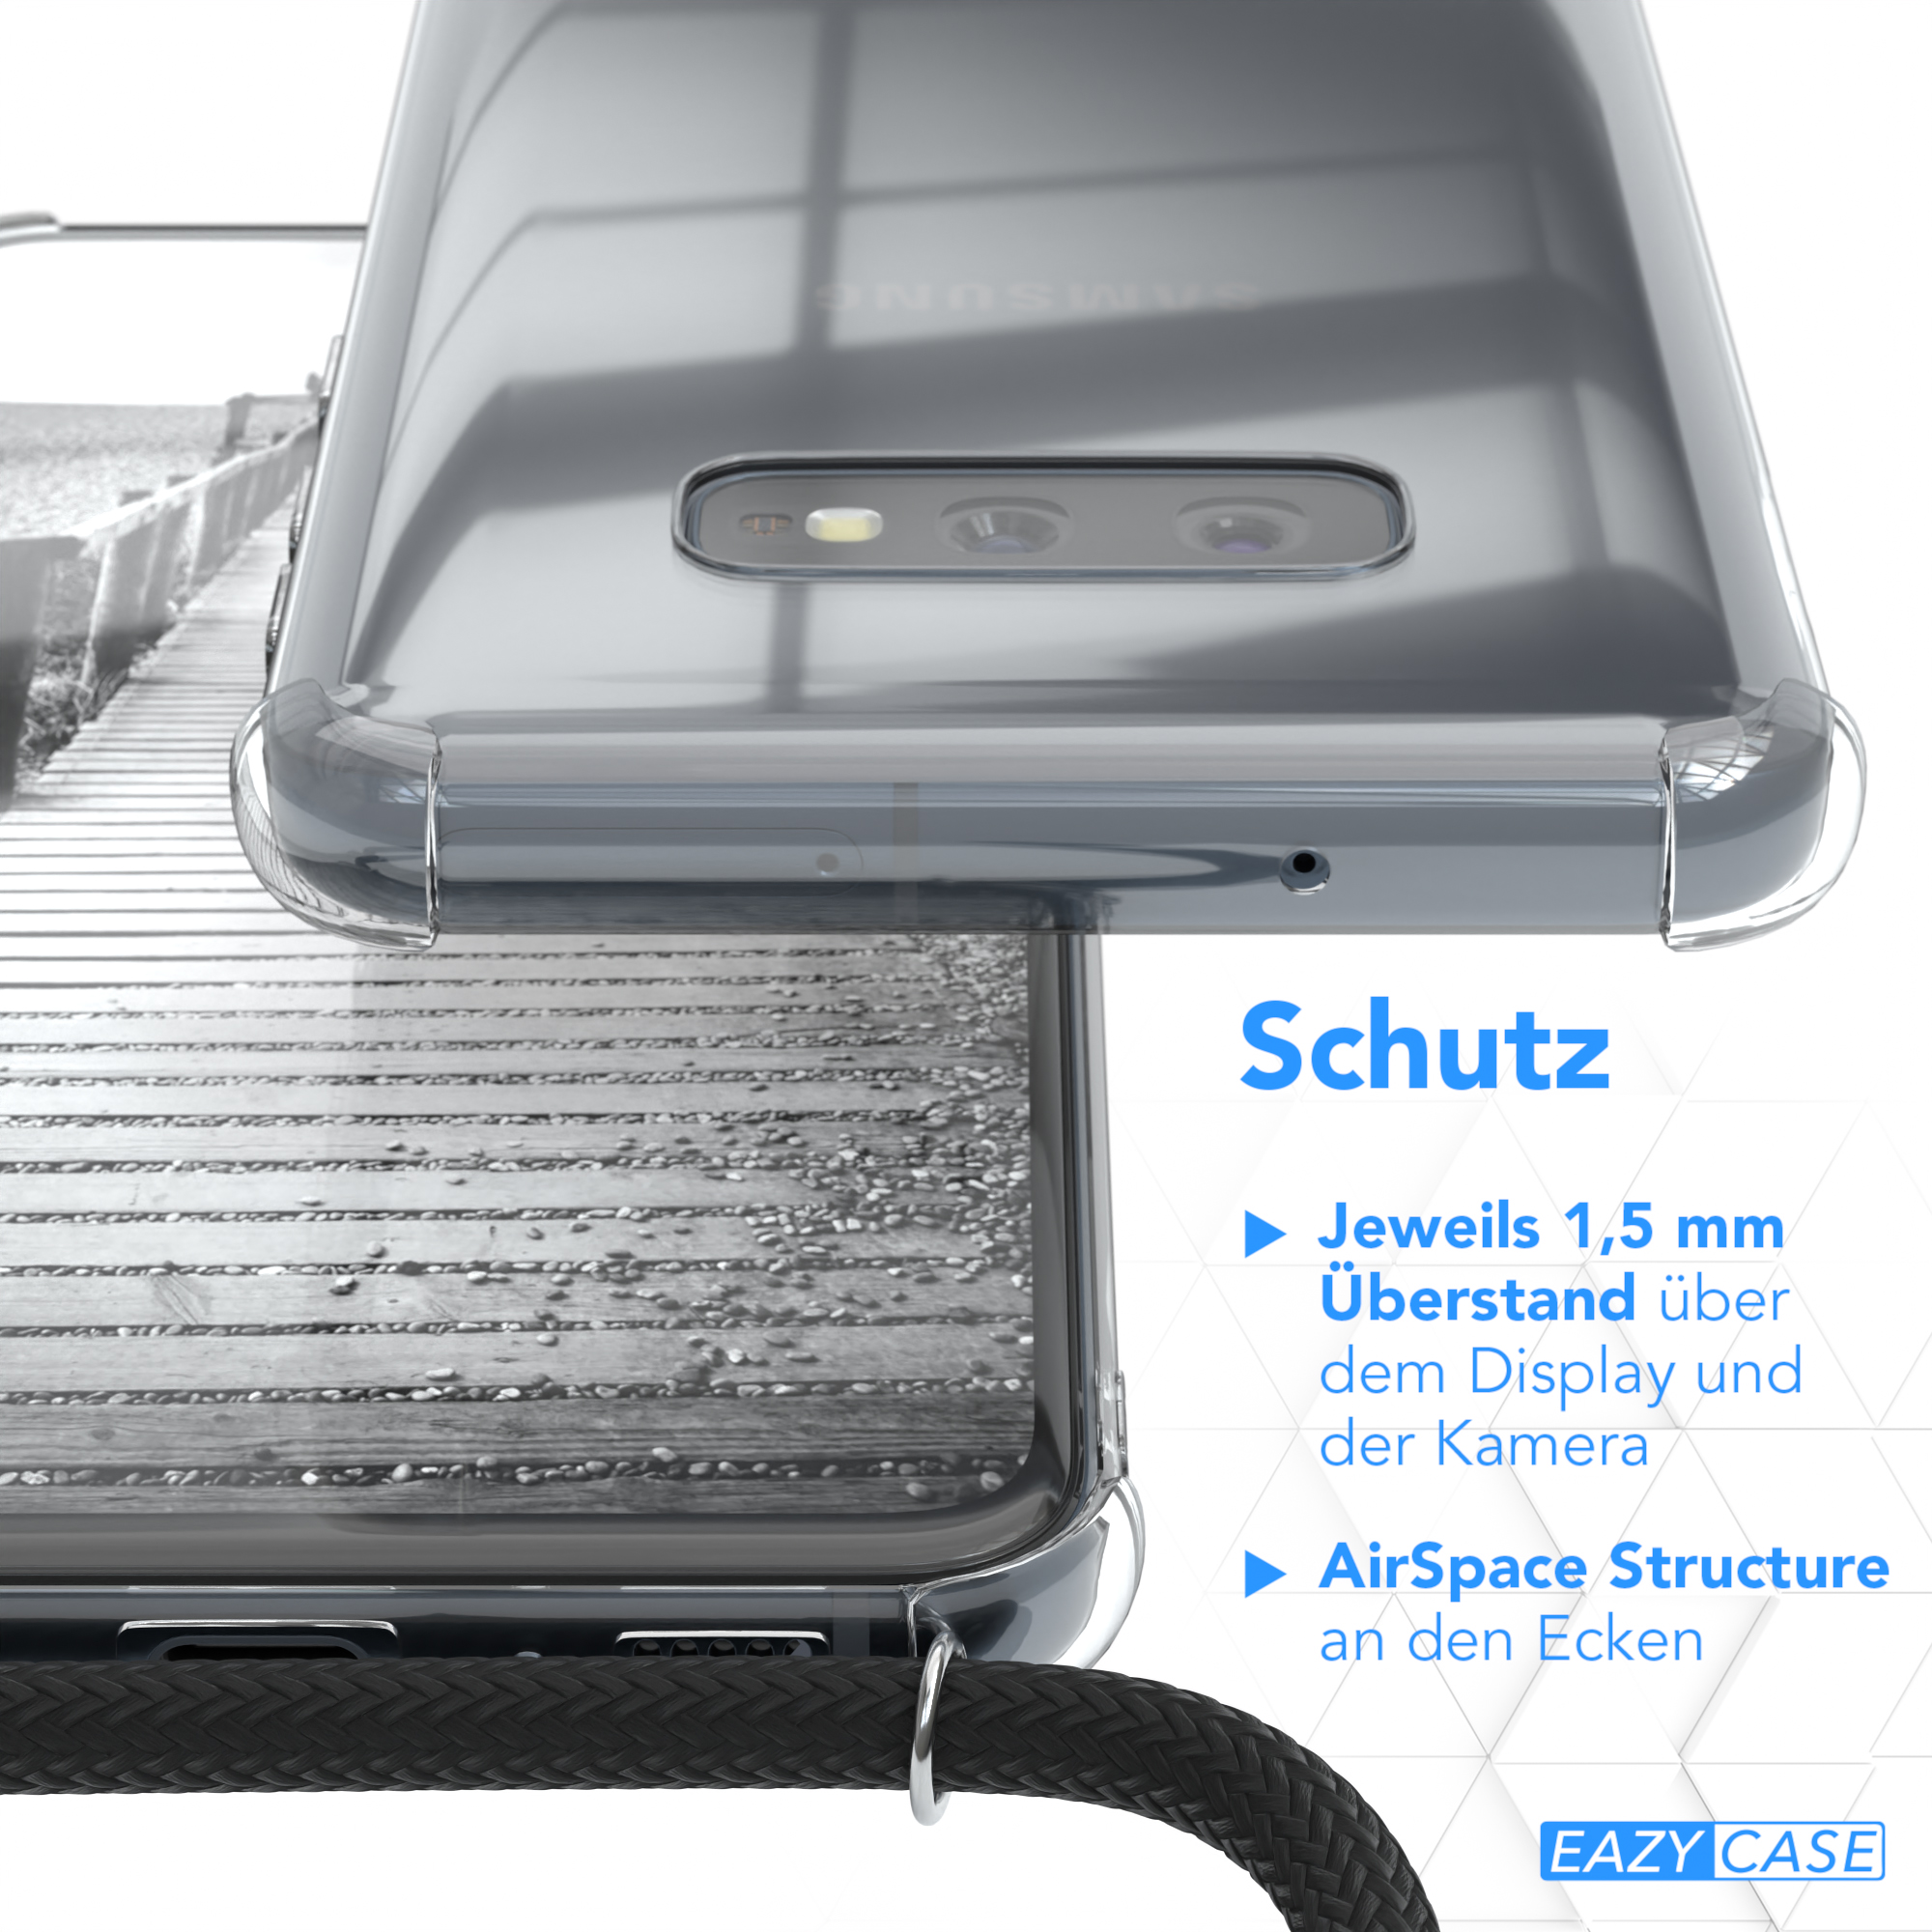 Samsung, Schwarz, Handykette Galaxy + extra S10e, CASE Gold Umhängetasche, EAZY Metall Kordel